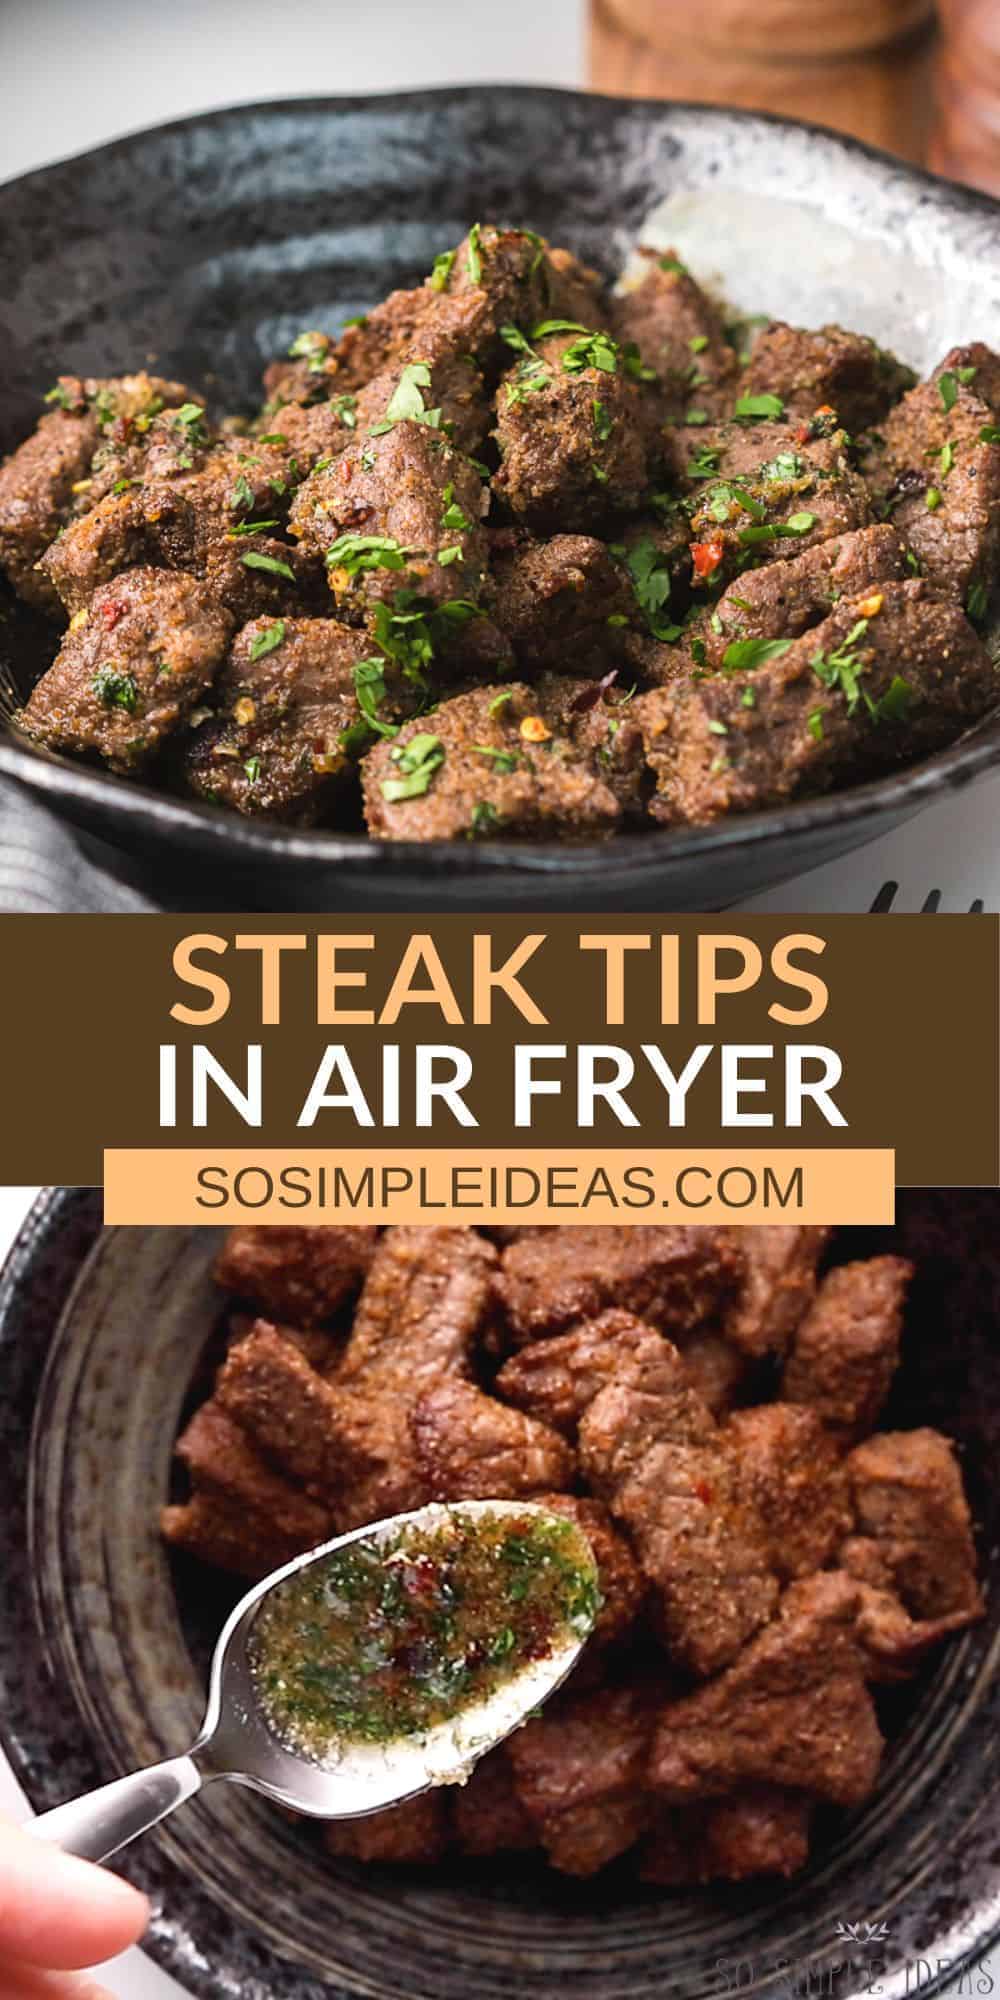 steak tips in air fryer pinterest image.